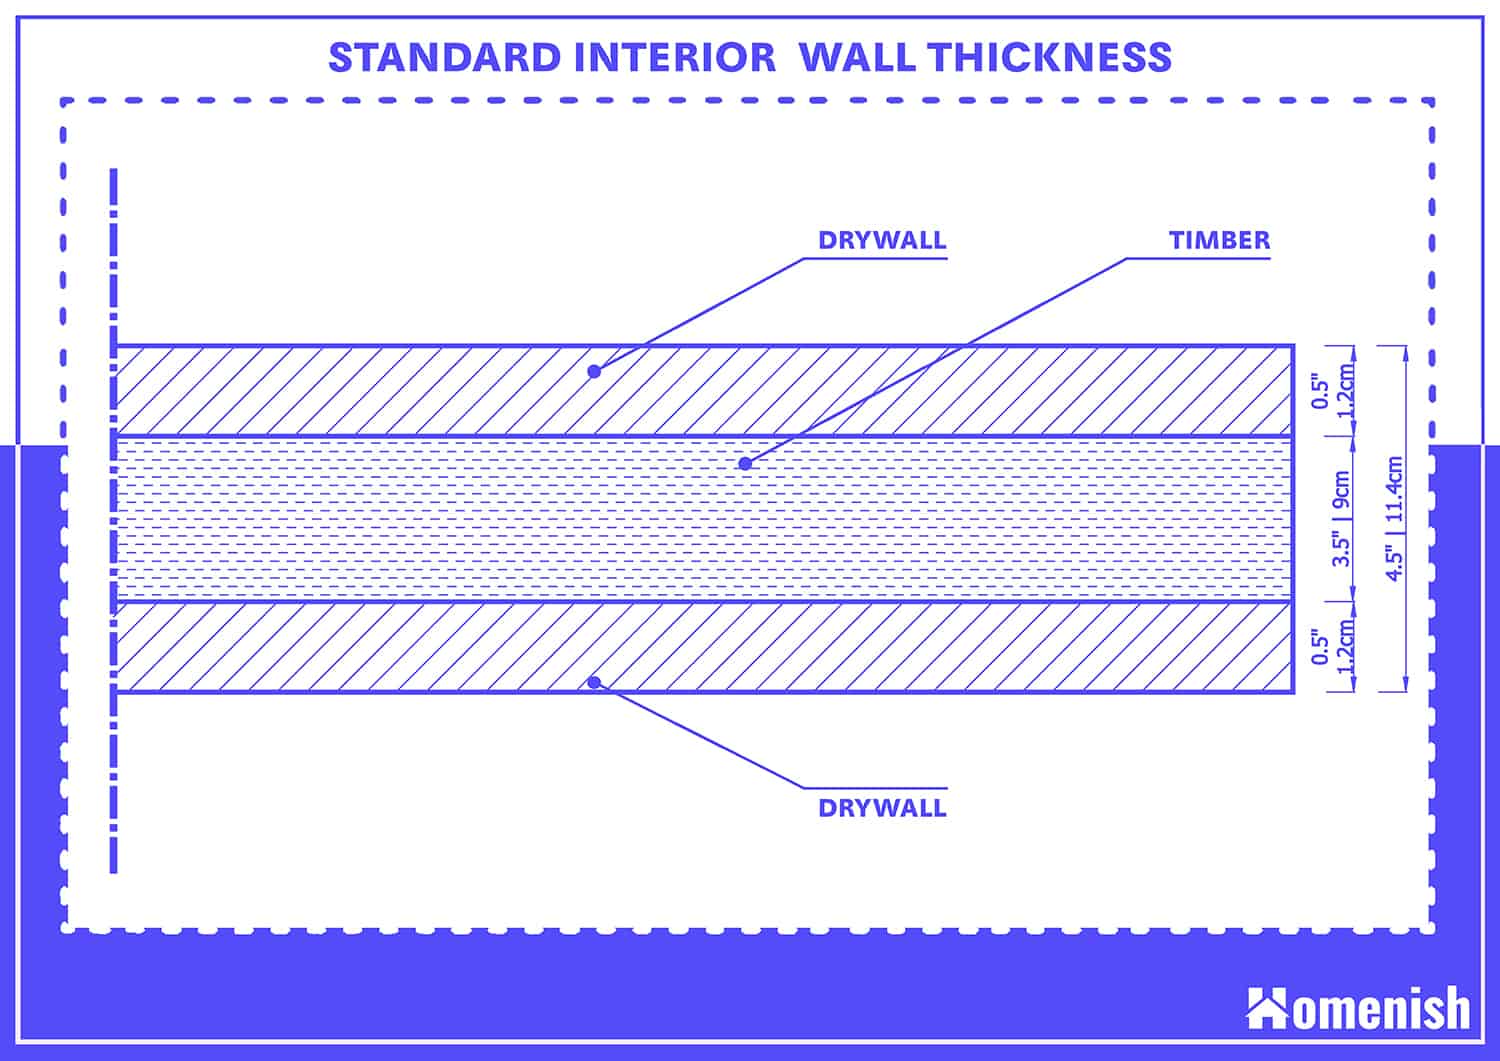 Standard Interior Wall Thickness